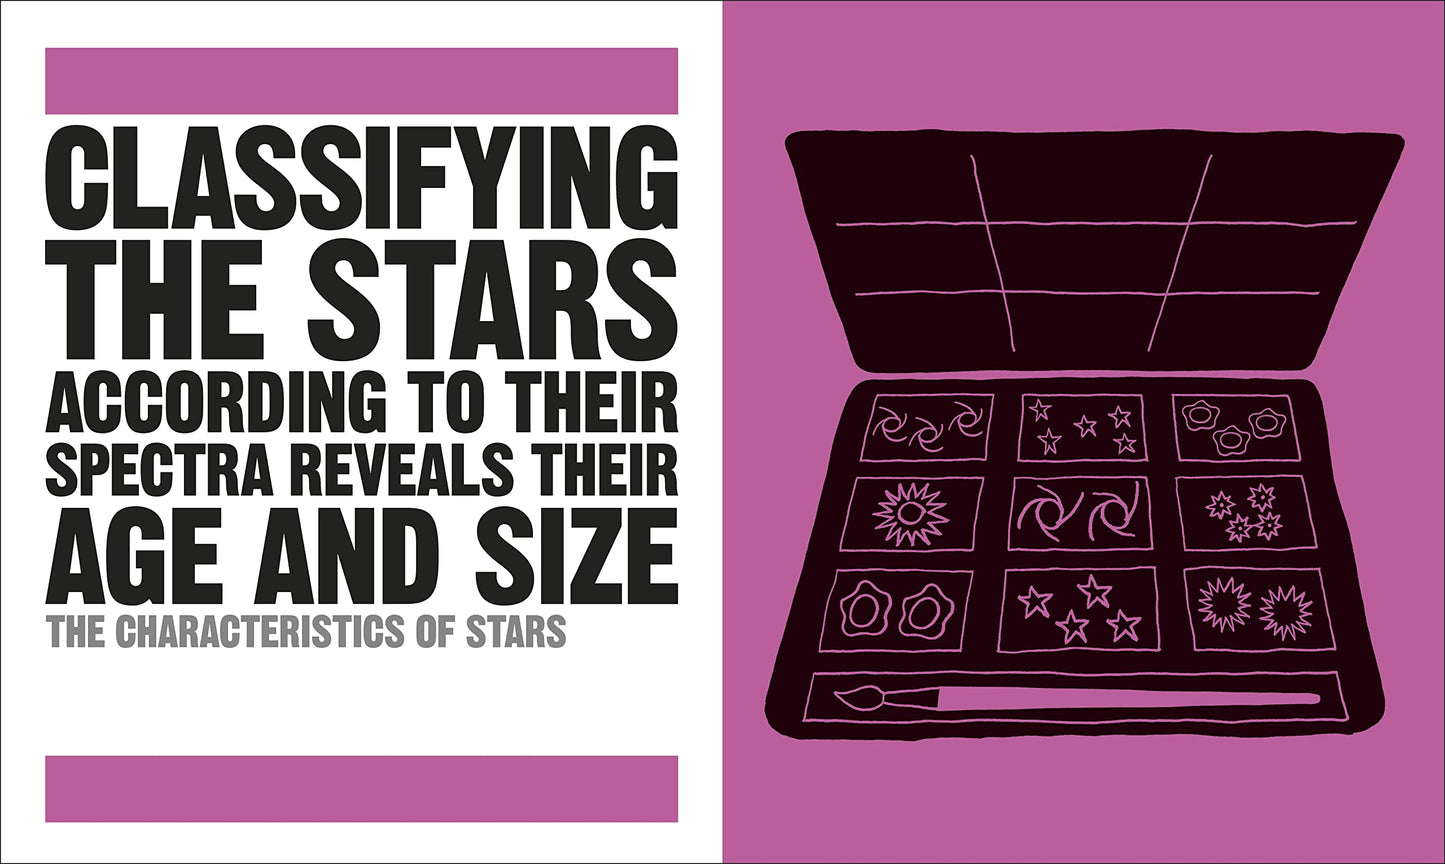 Astronomy Book: Big Ideas Simply Explained